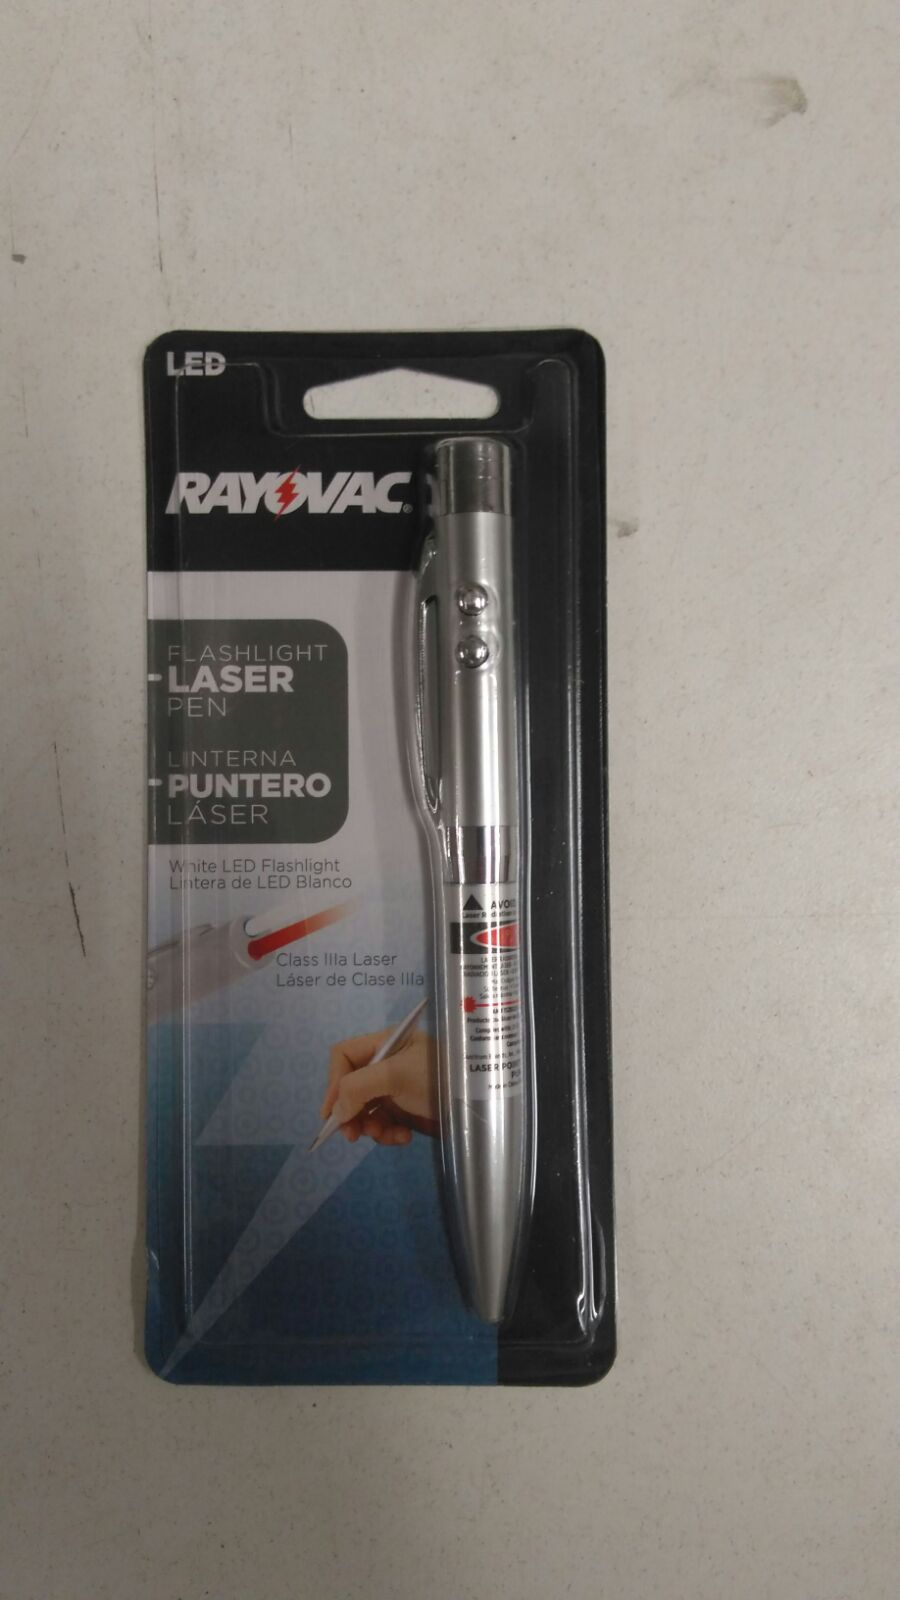 Rayovac LED Flashlight Laser Pen